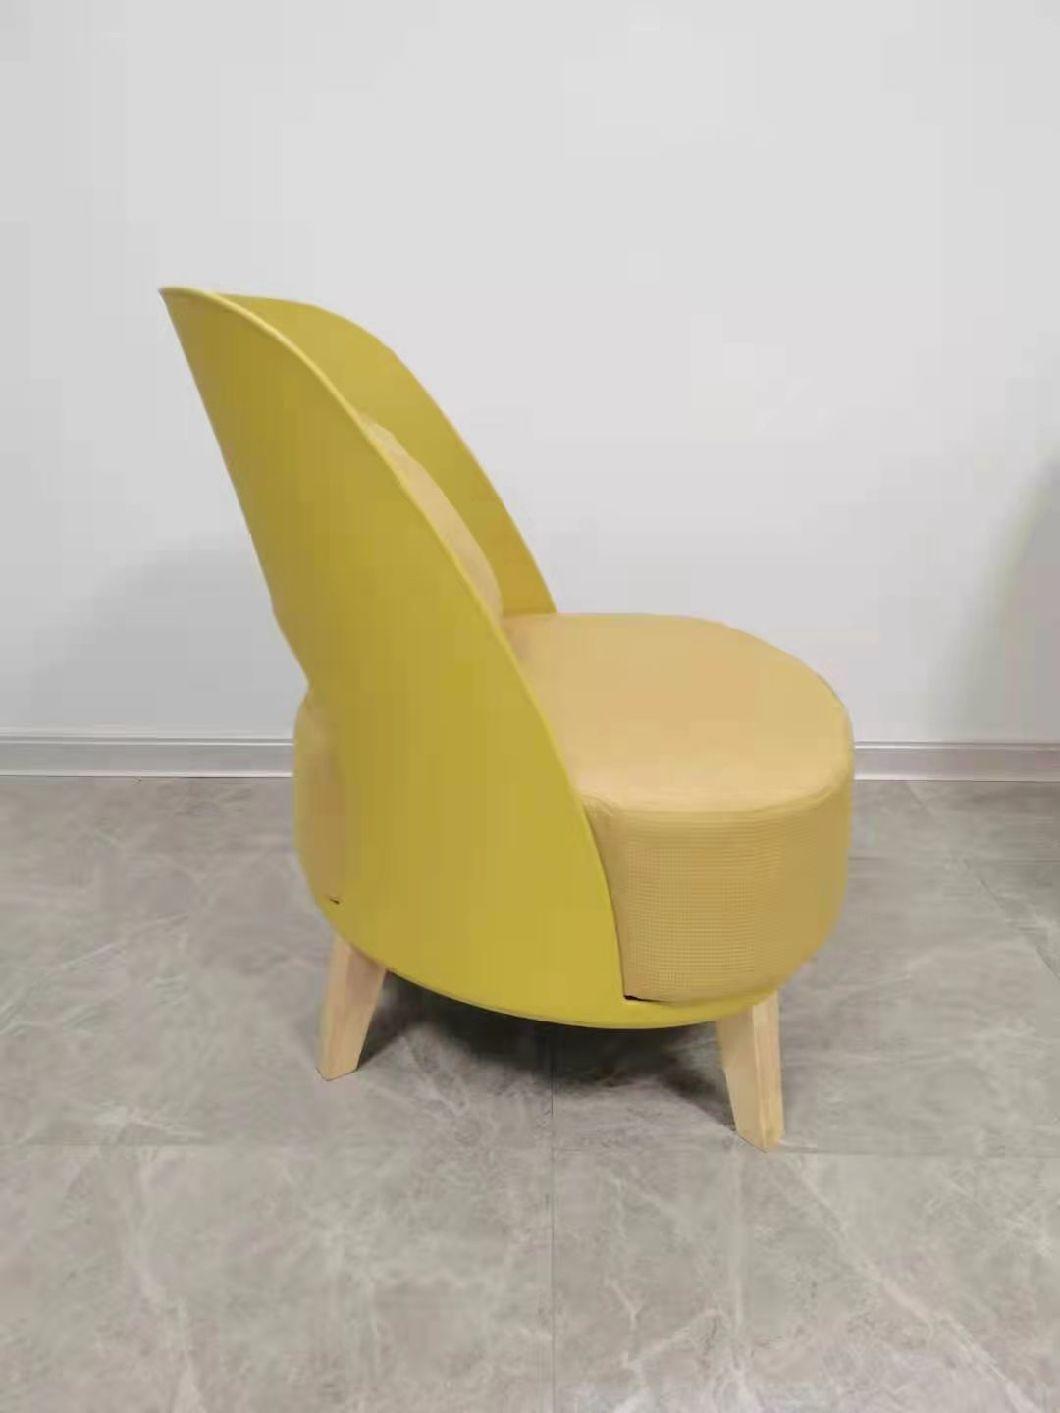 Modern Design Velvet Fabric Powder Coated Legs Comfortable Nordic Dining Chair for Dining Room